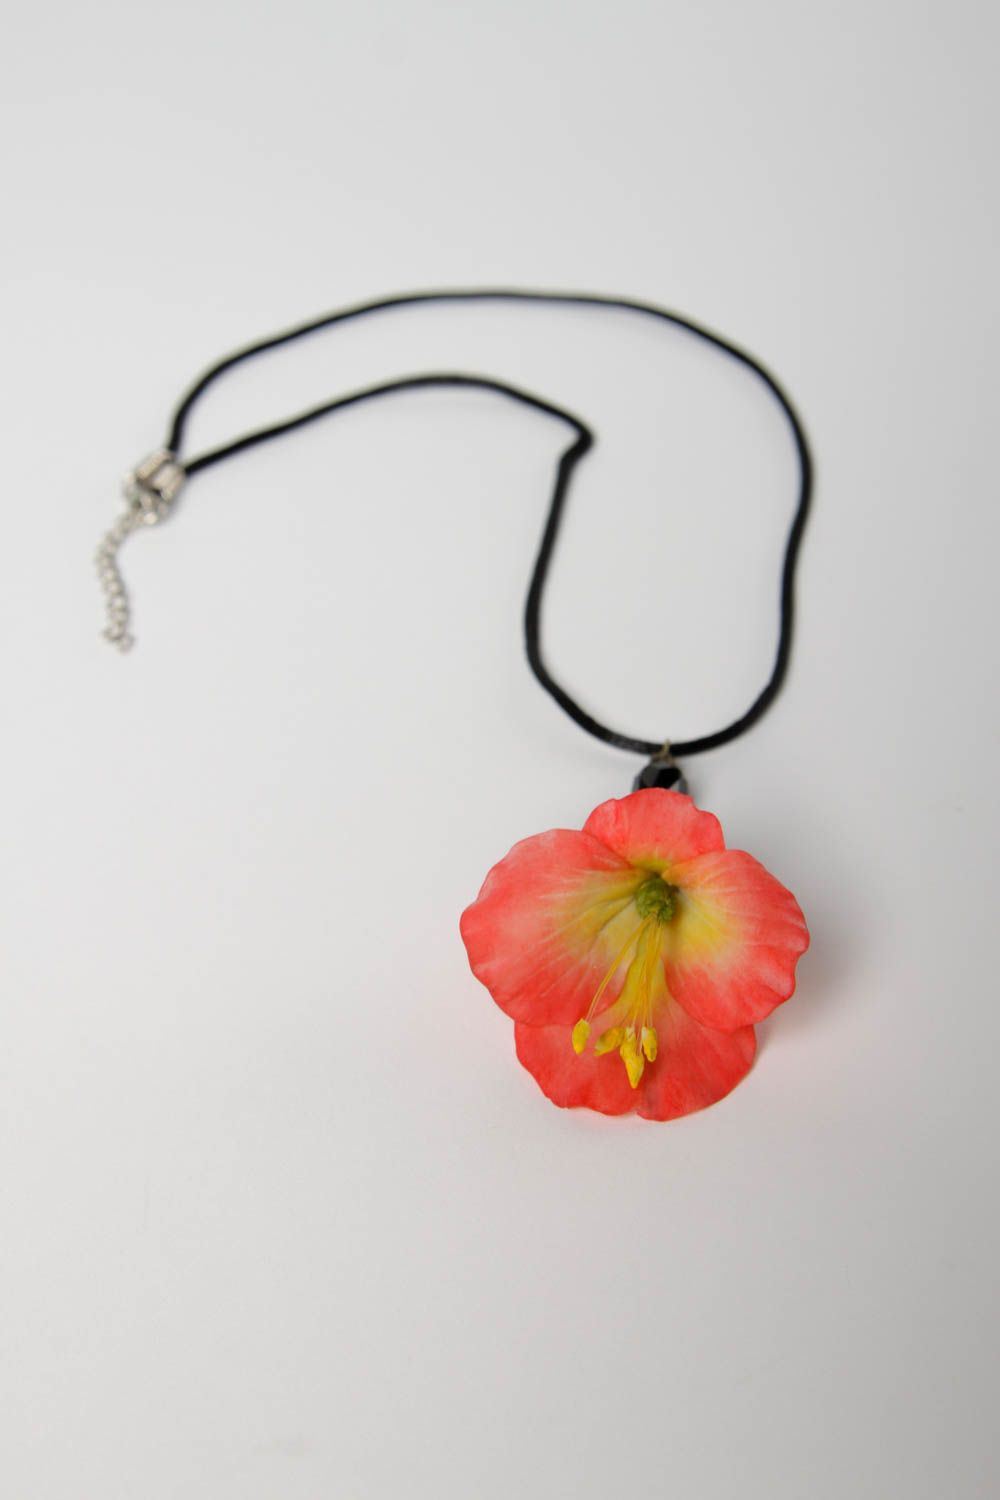 Handmade pendant designer pendant unusual gift ideas clay accessory for girls photo 2